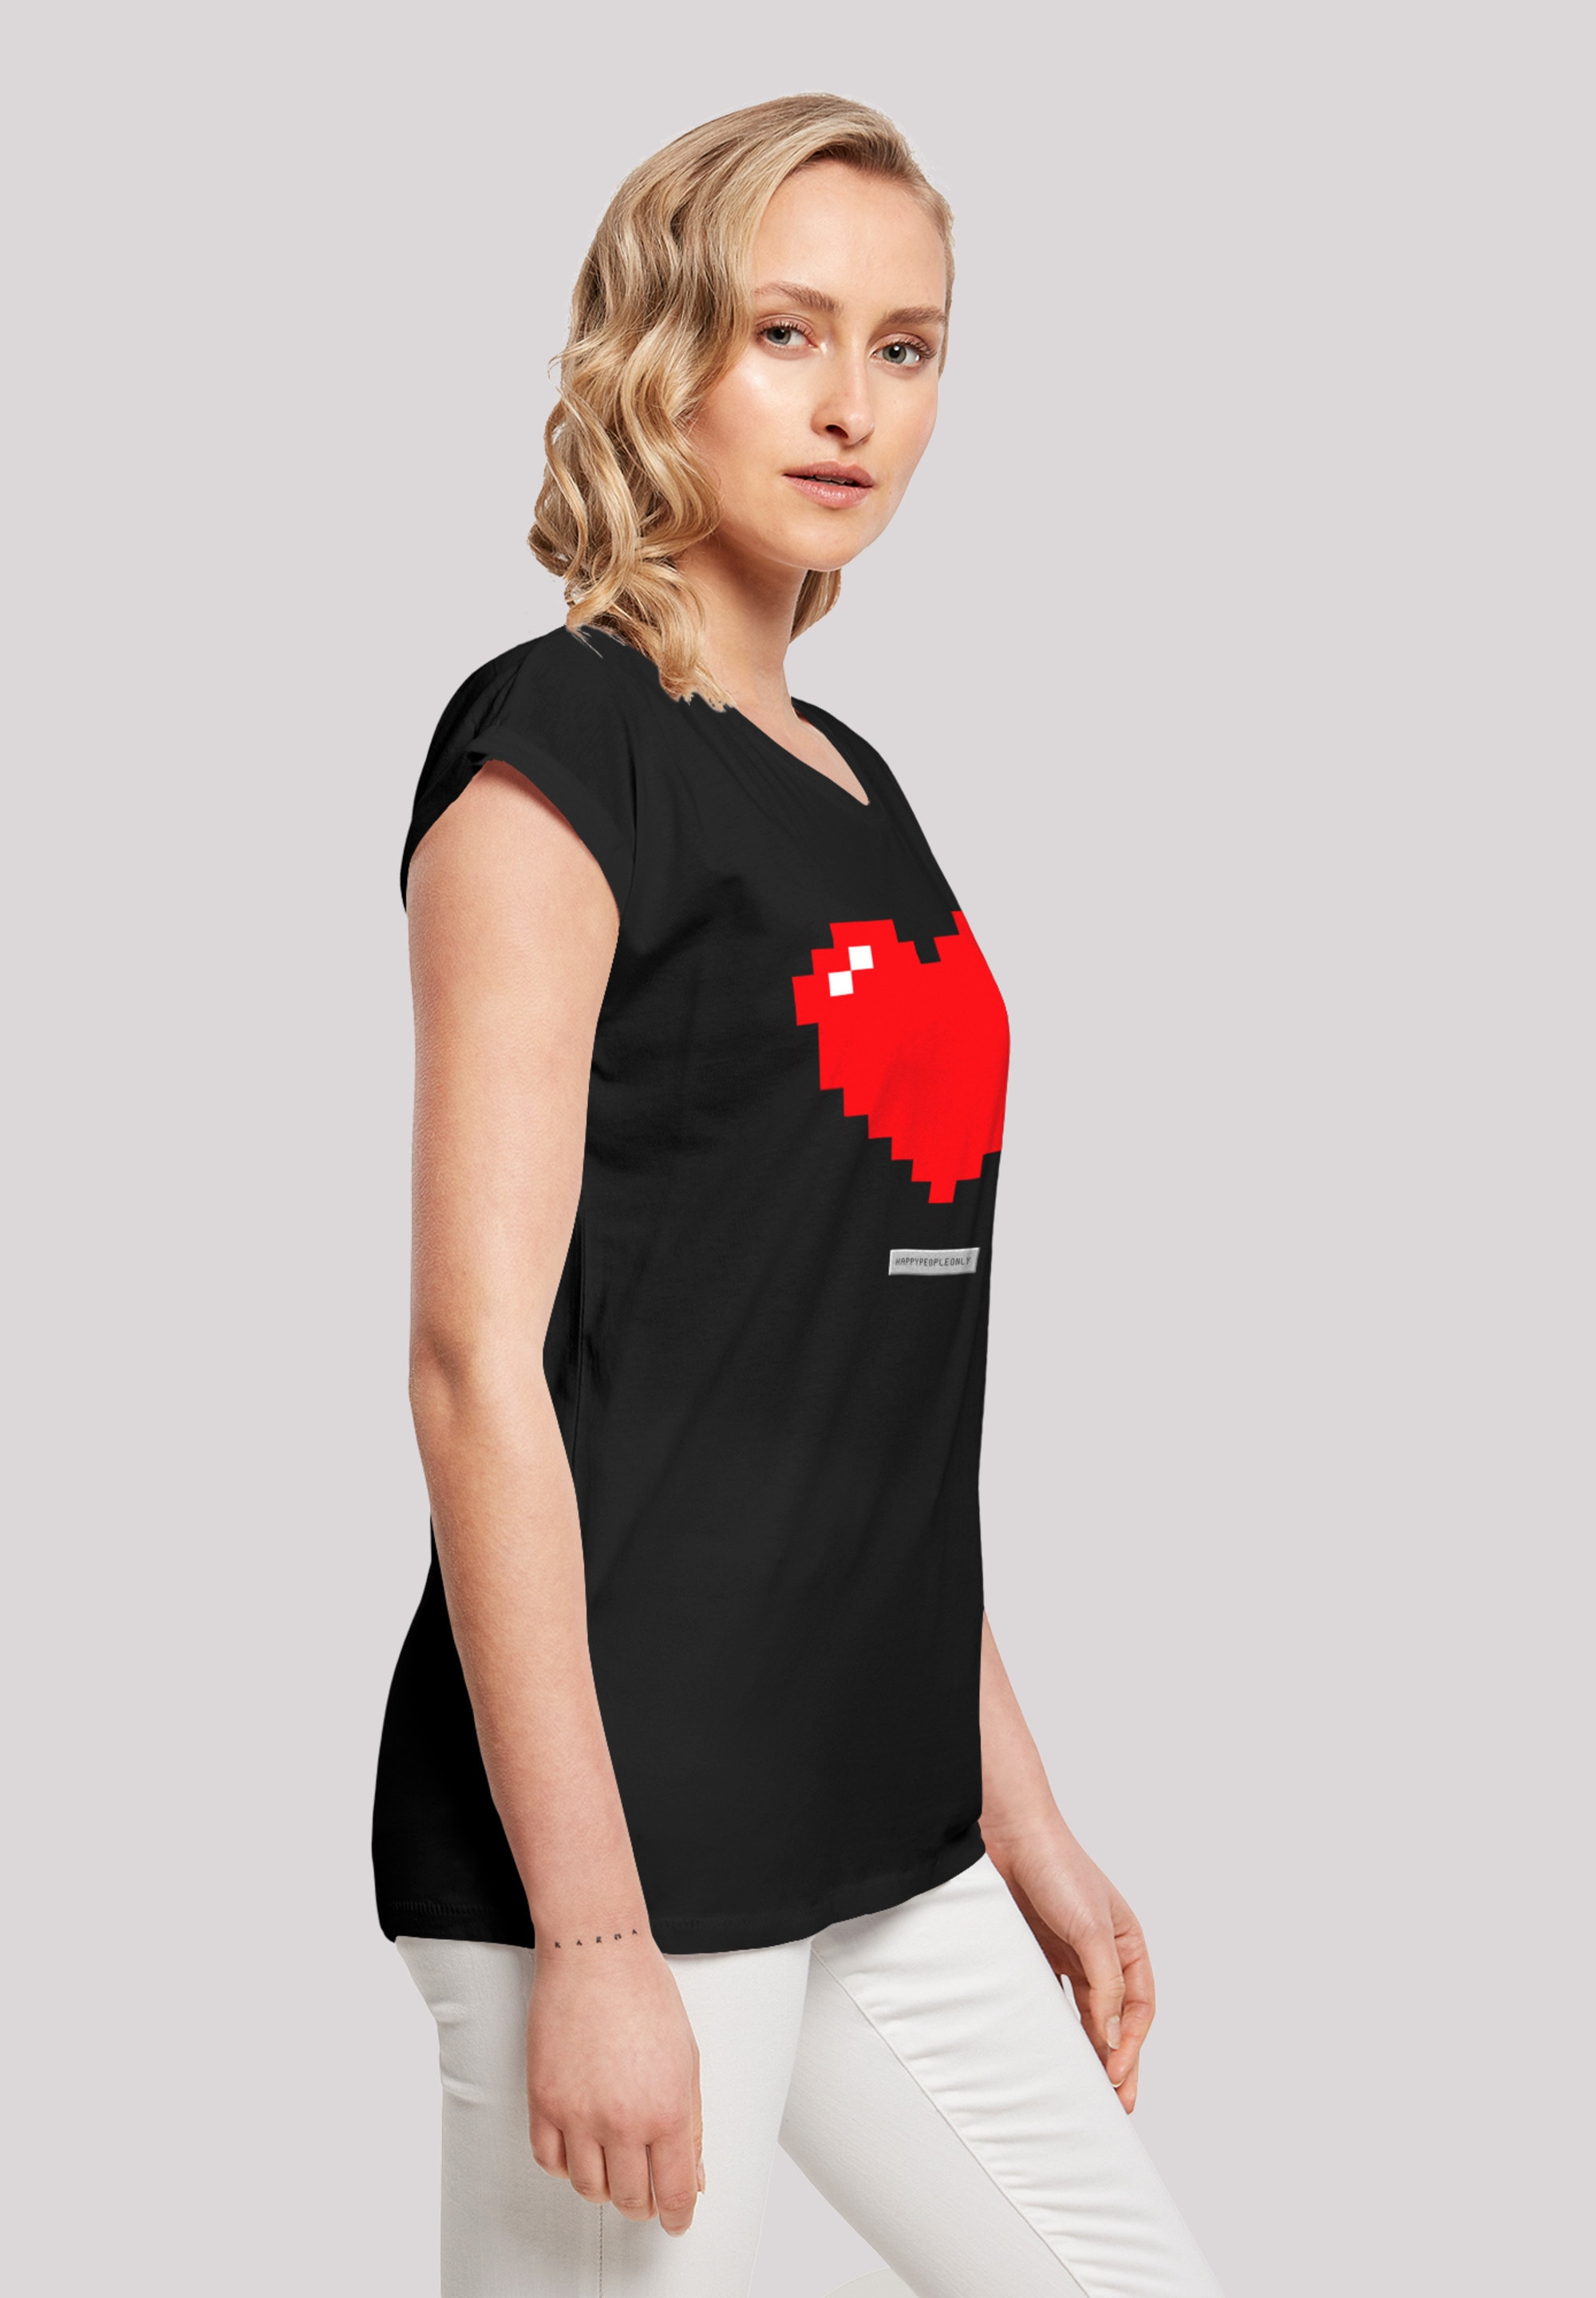 F4NT4STIC T-Shirt »Pixel Herz Good Vibes Happy People«, Print kaufen | BAUR | T-Shirts